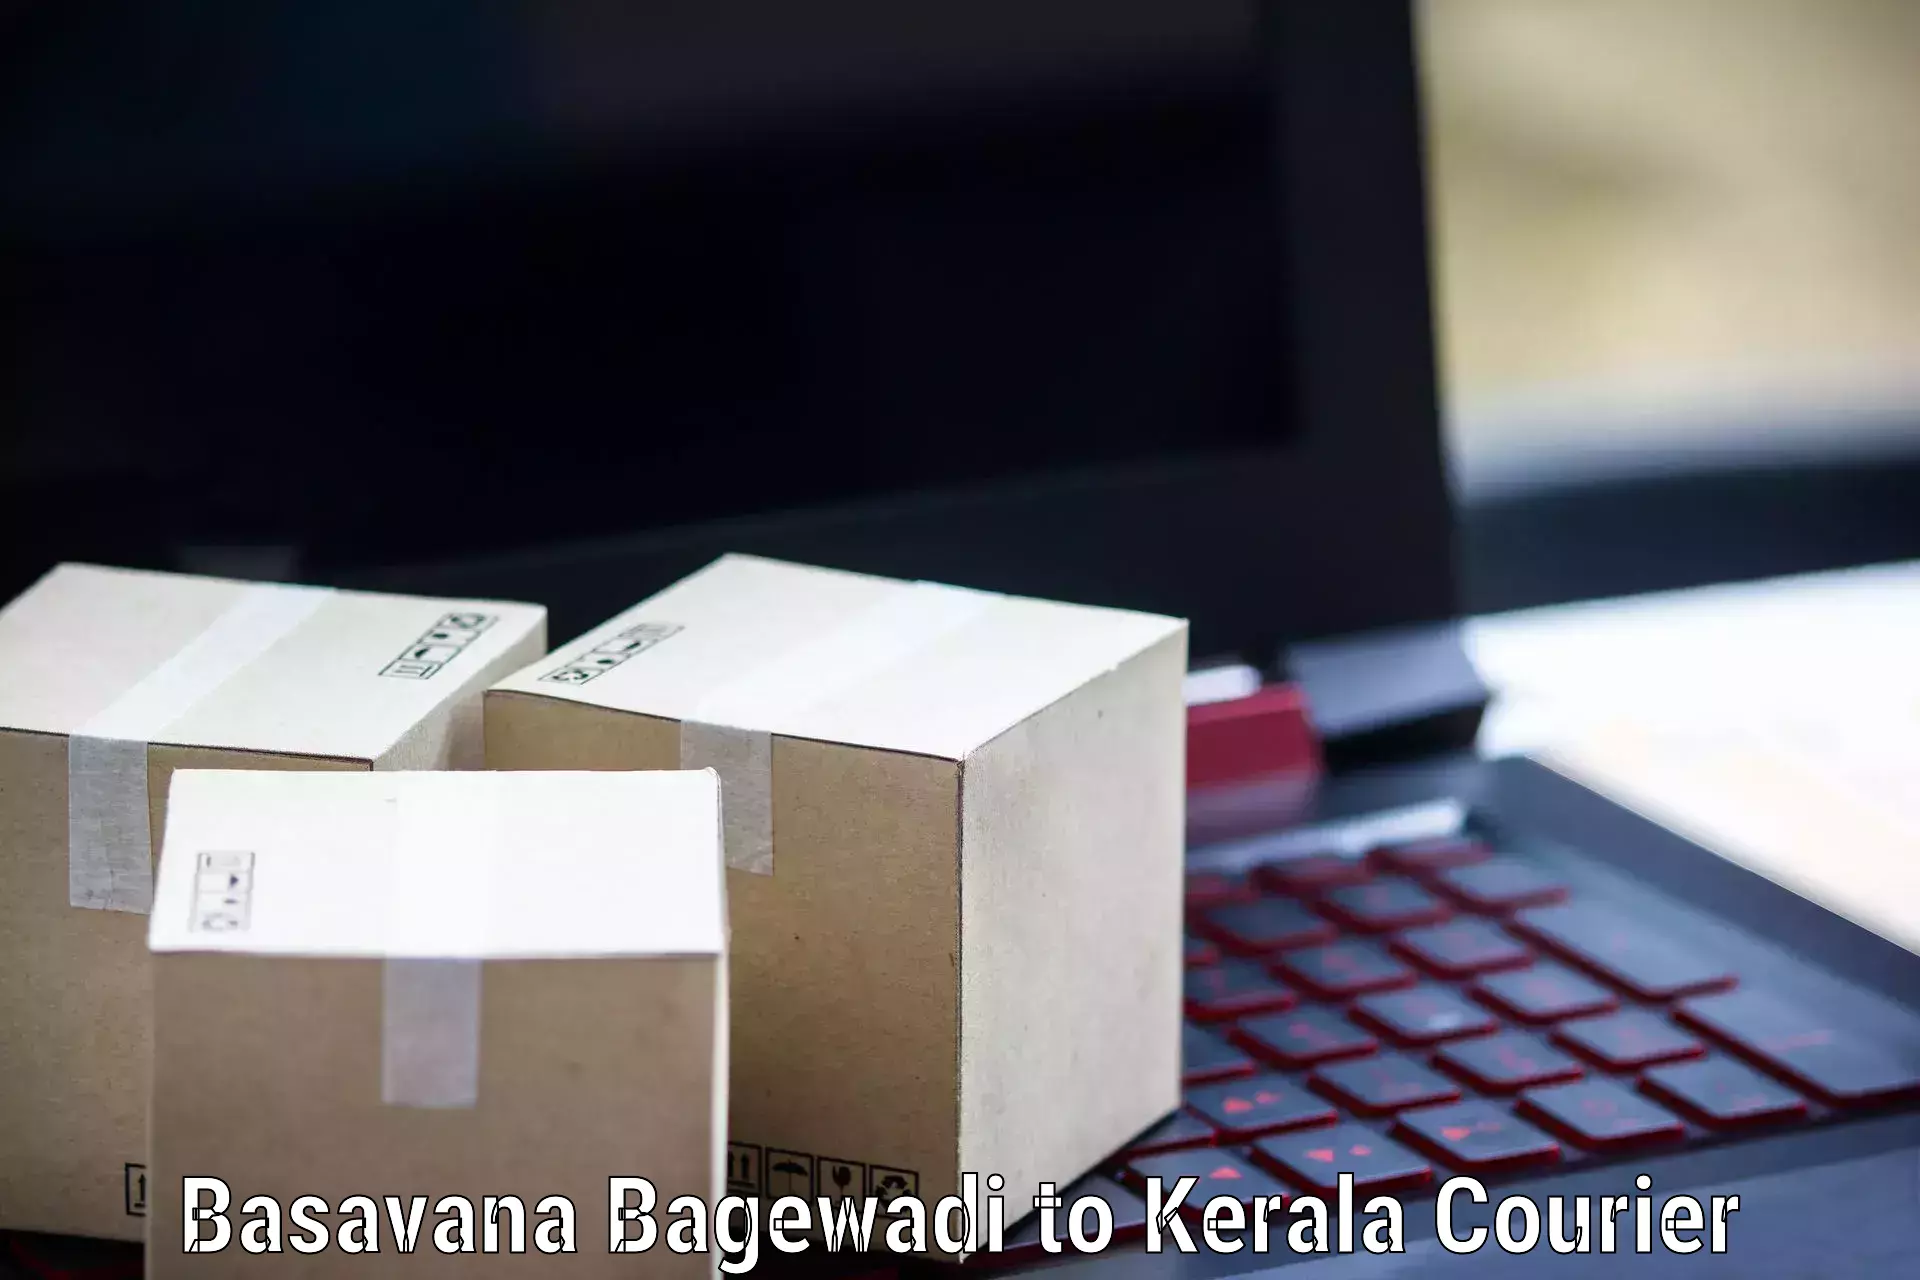 On-demand shipping options Basavana Bagewadi to Thrissur